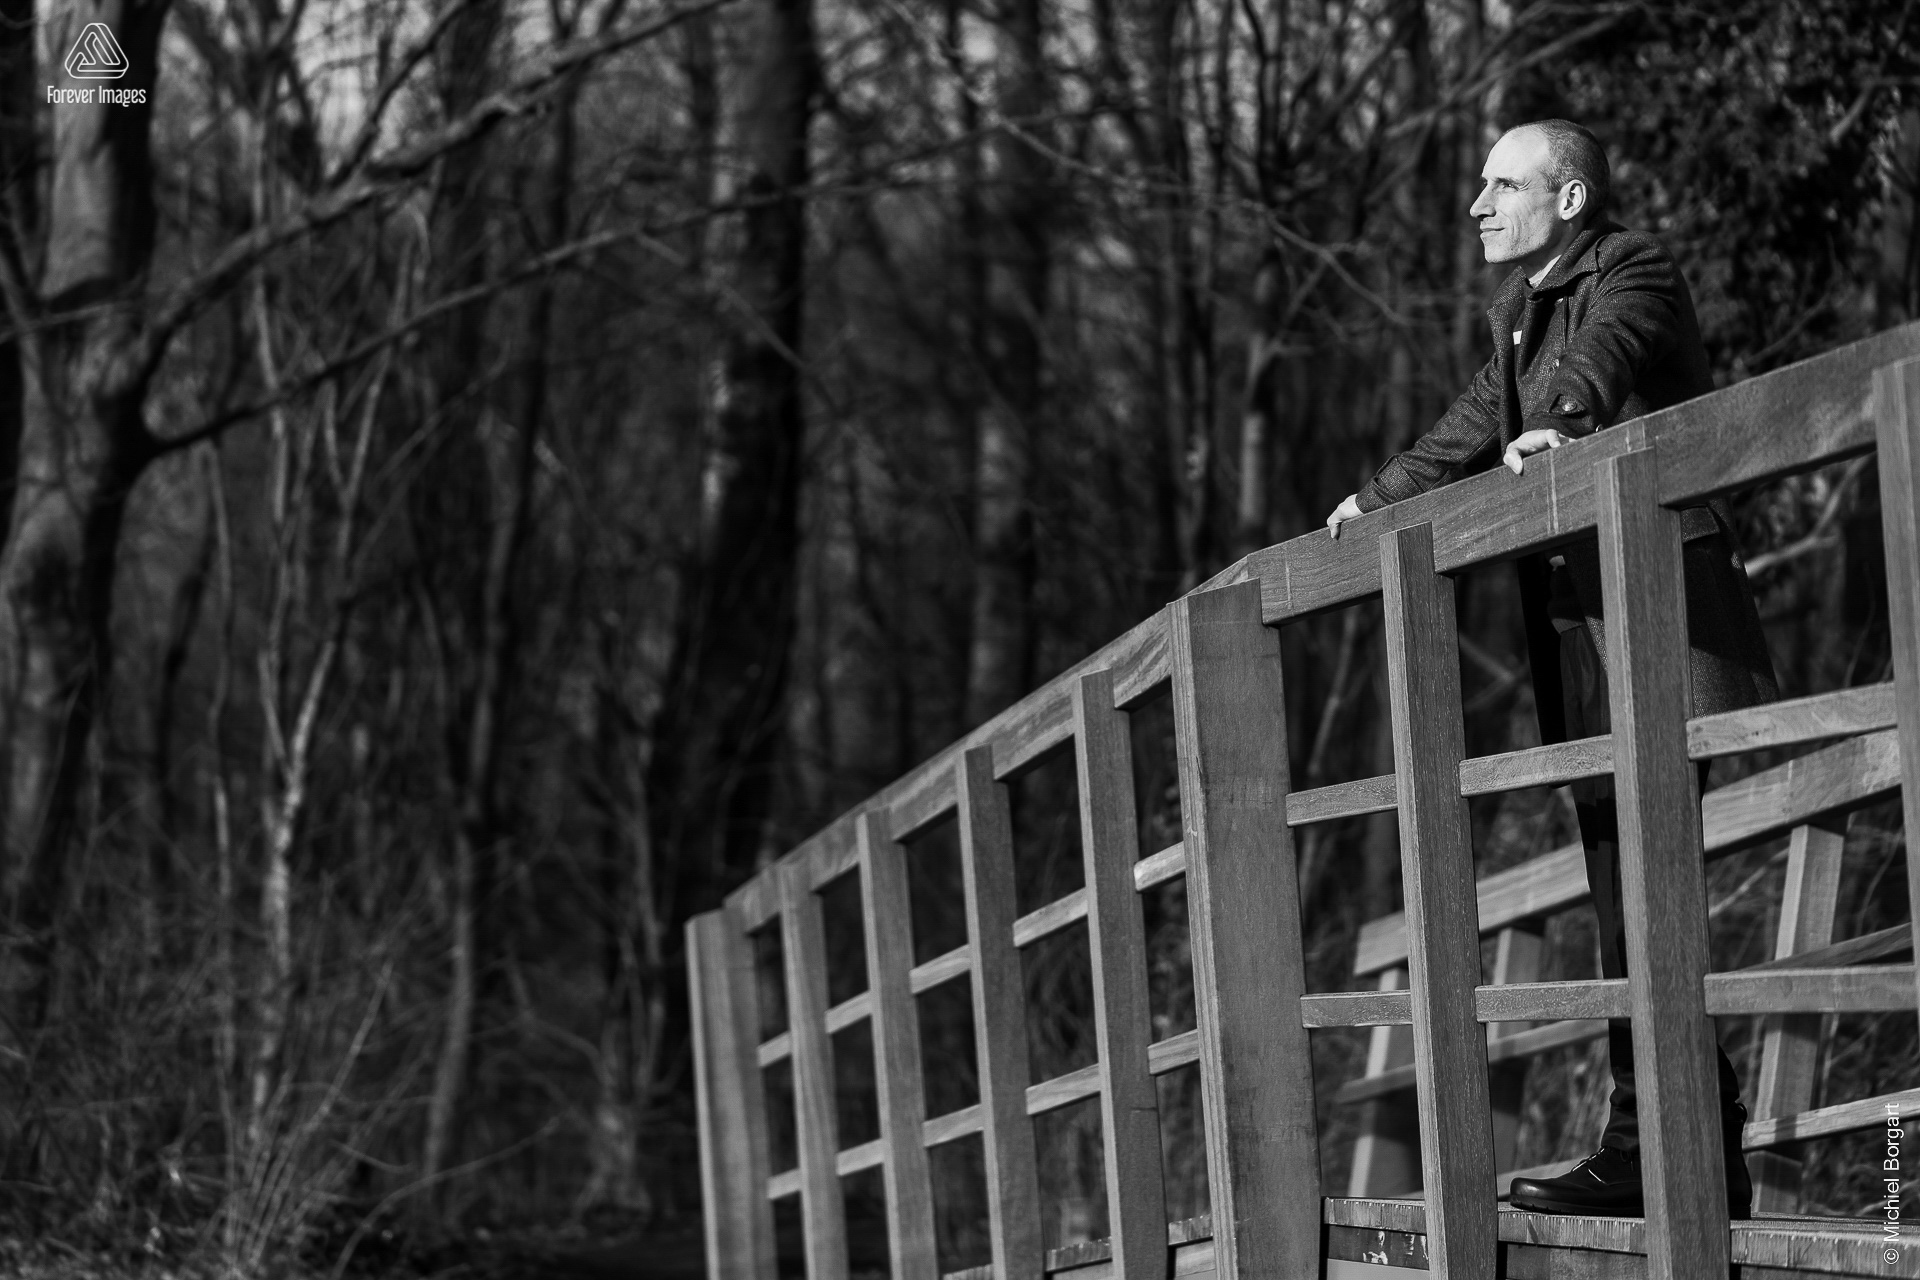 Portretfoto zwart-wit man op houten brug vooruit kijkend met glimlach | Robin Het Twiske De Stootersplas | Portretfotograaf Michiel Borgart - Forever Images.